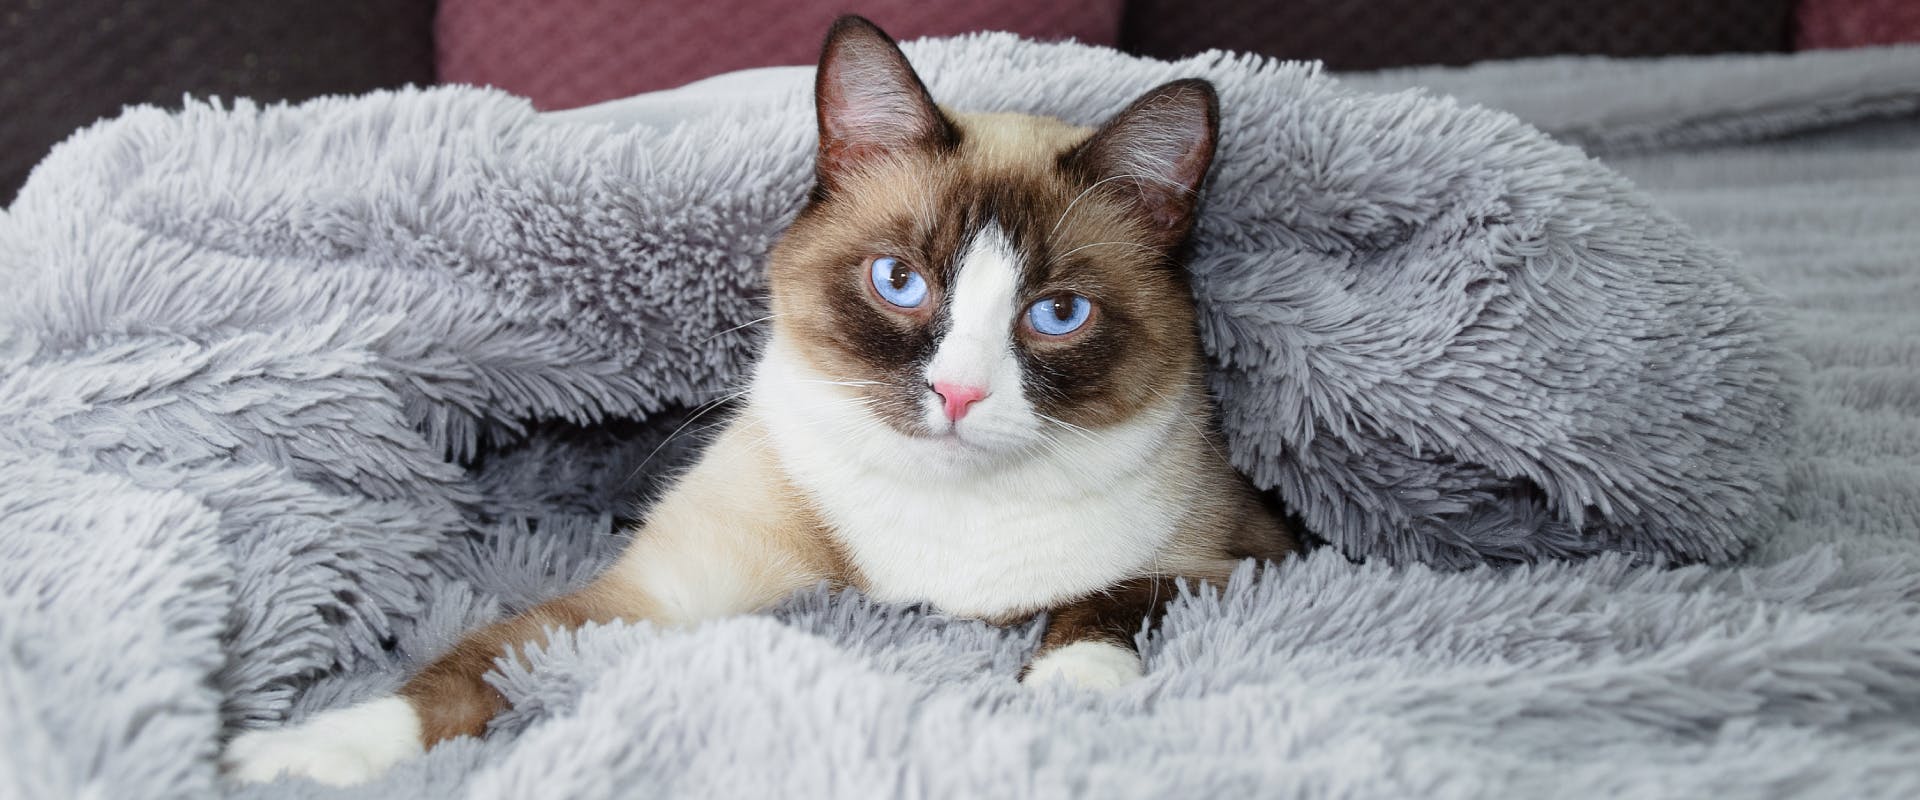 A Snowshoe cat snuggled up in a blanket.